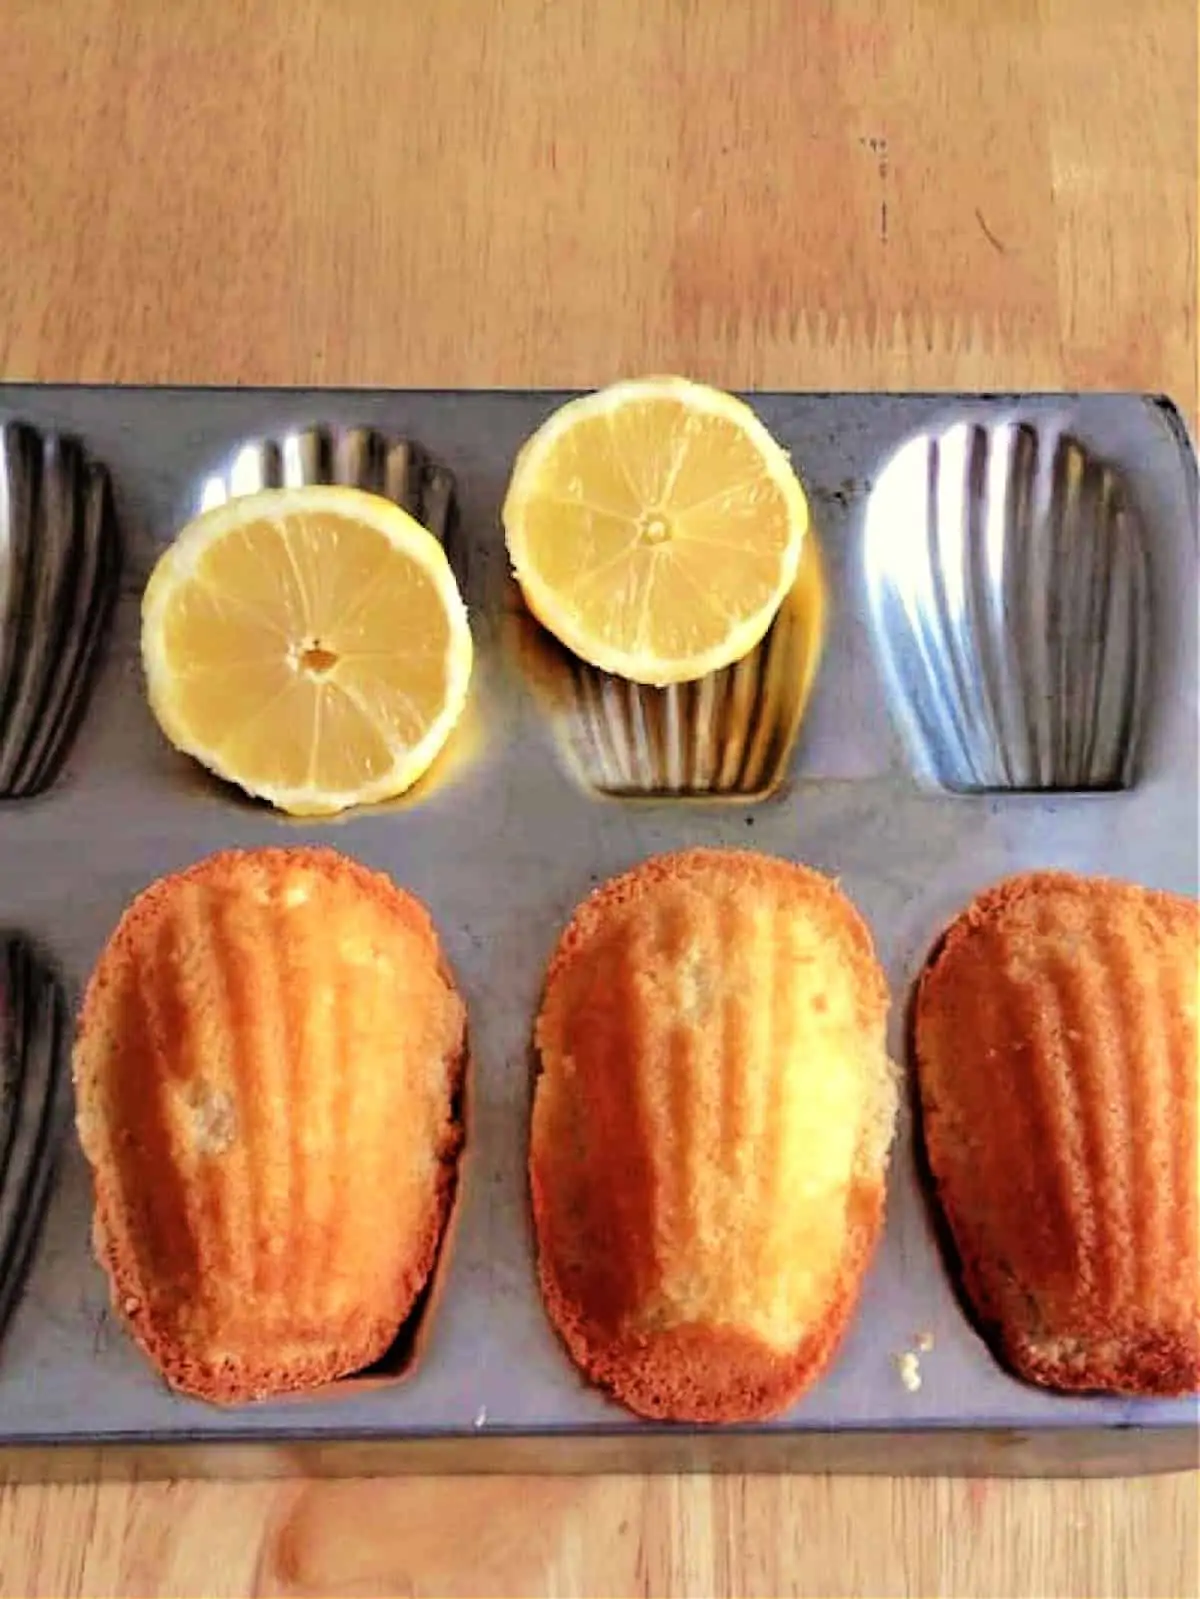 Madeleine cakes in a Madeleine tin, with lemon halves.